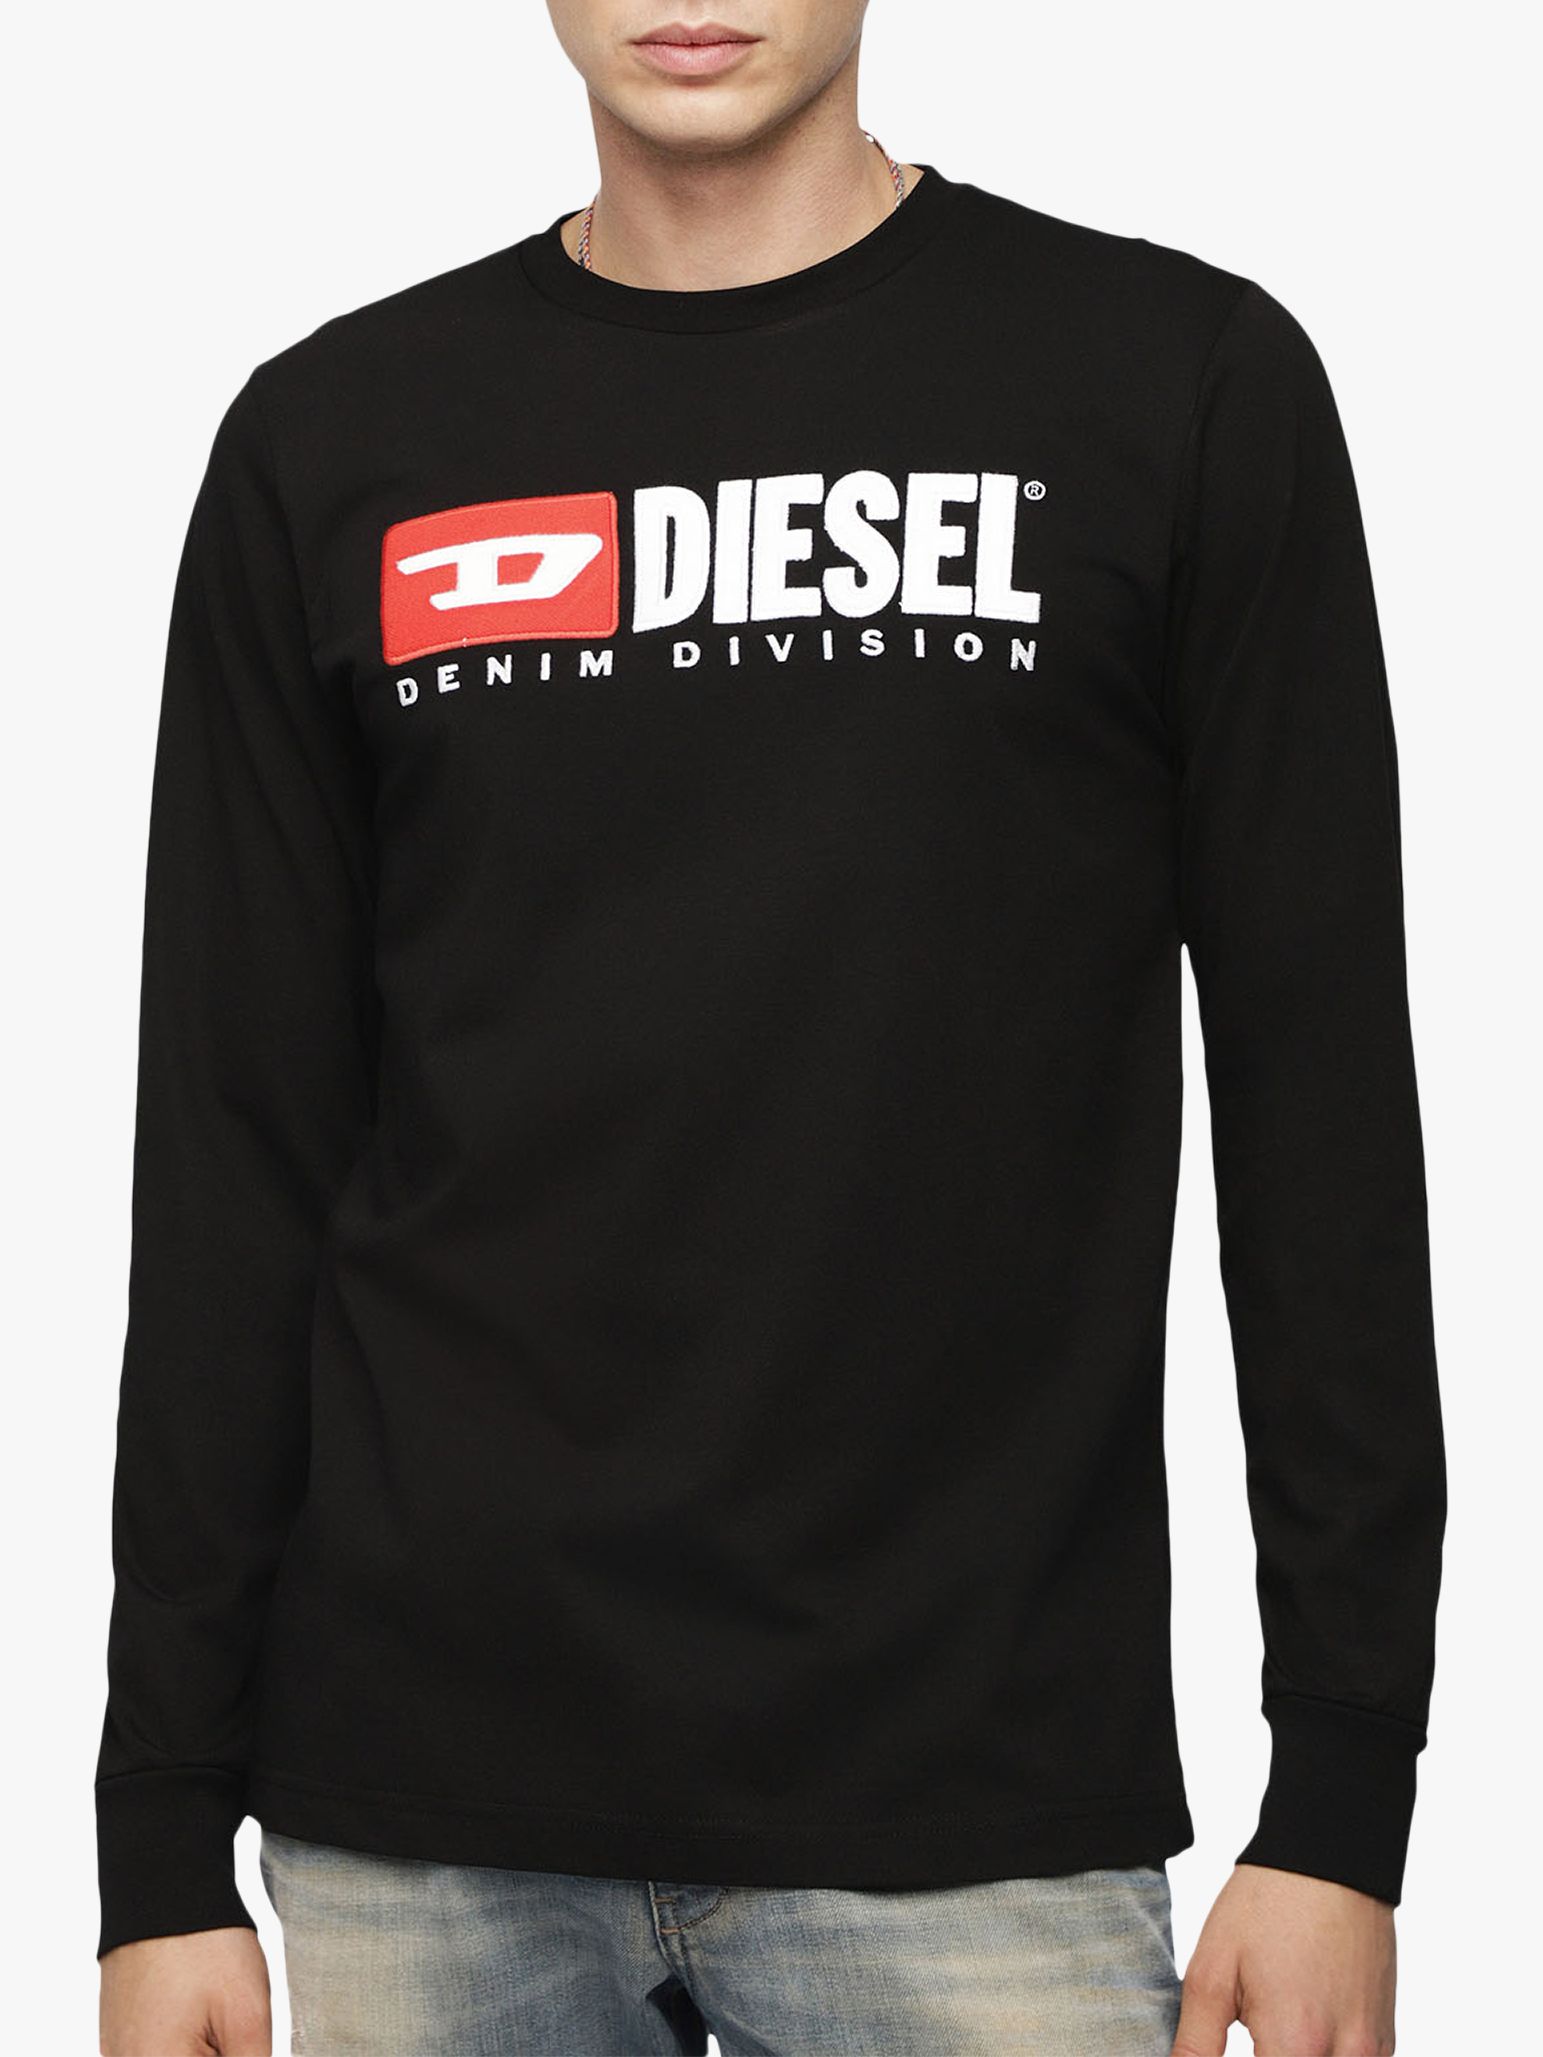 denim division diesel